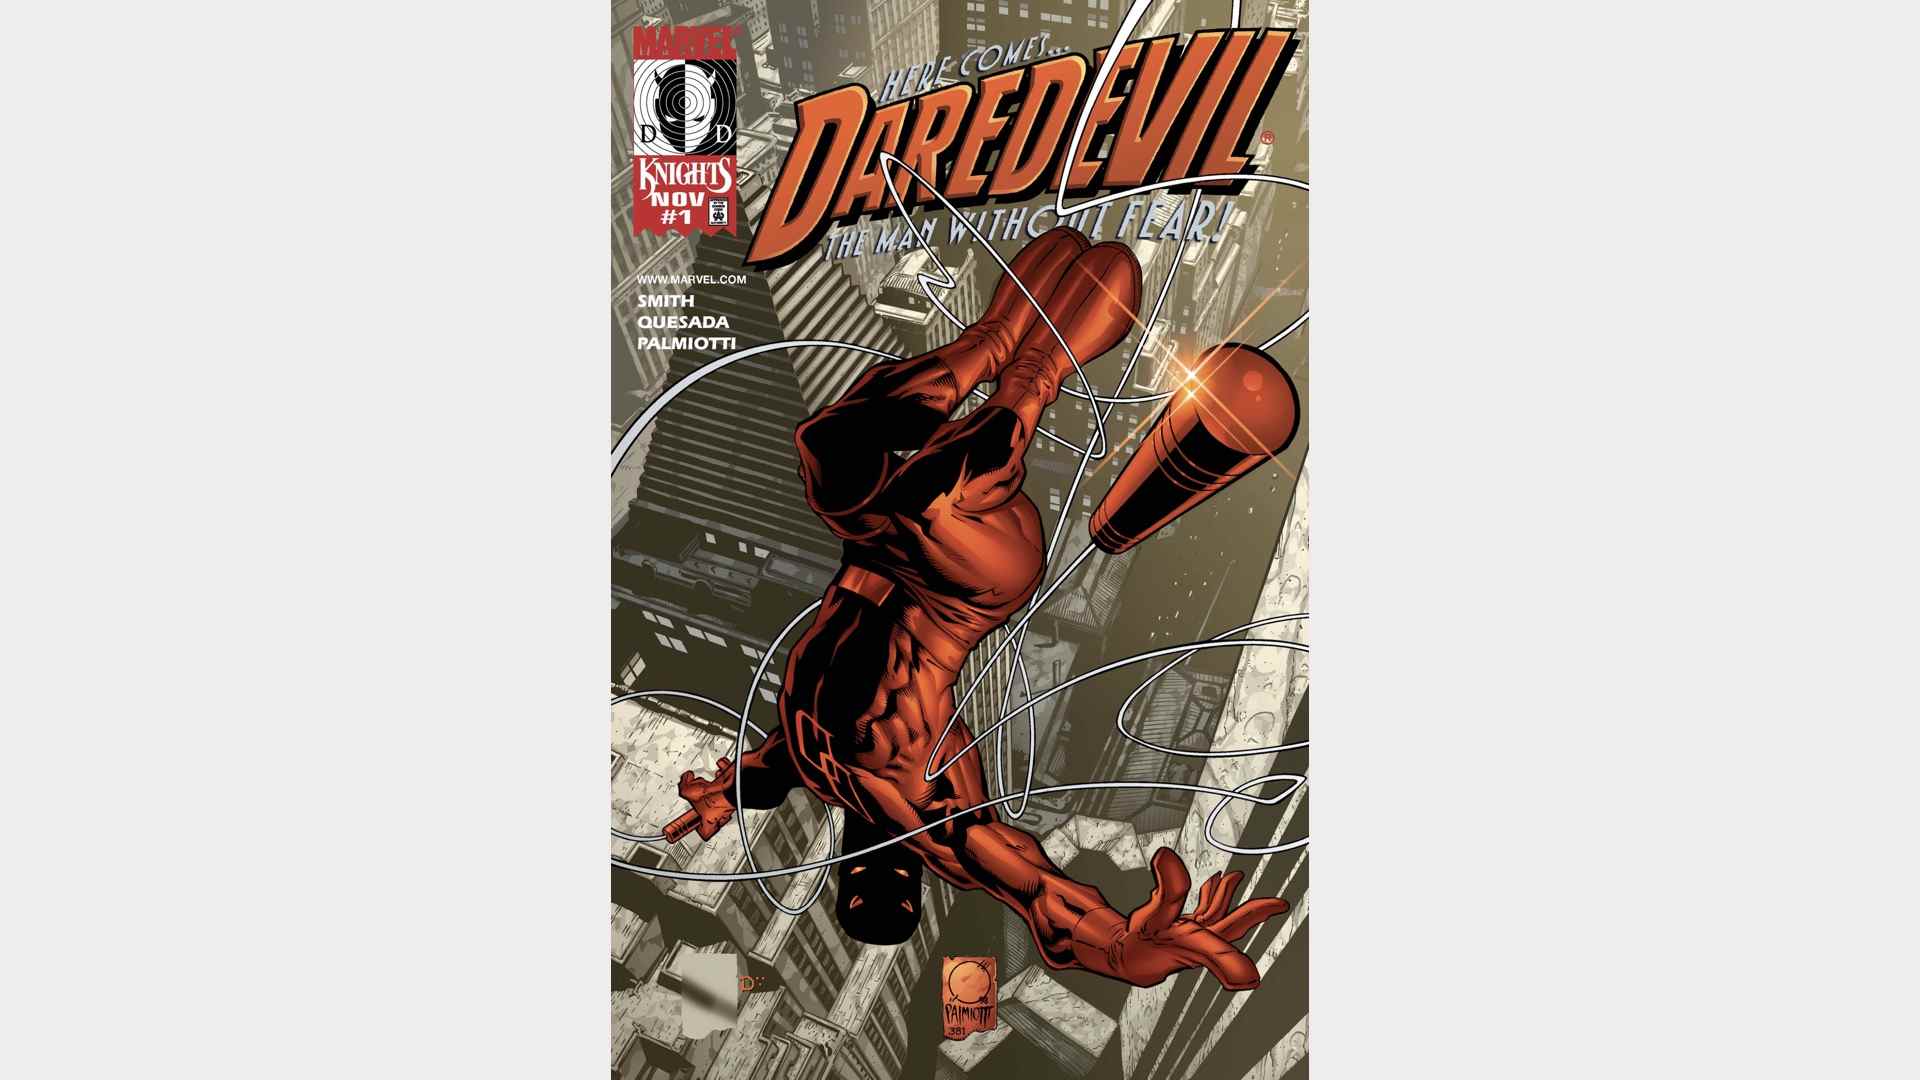 Couverture de Daredevil #1